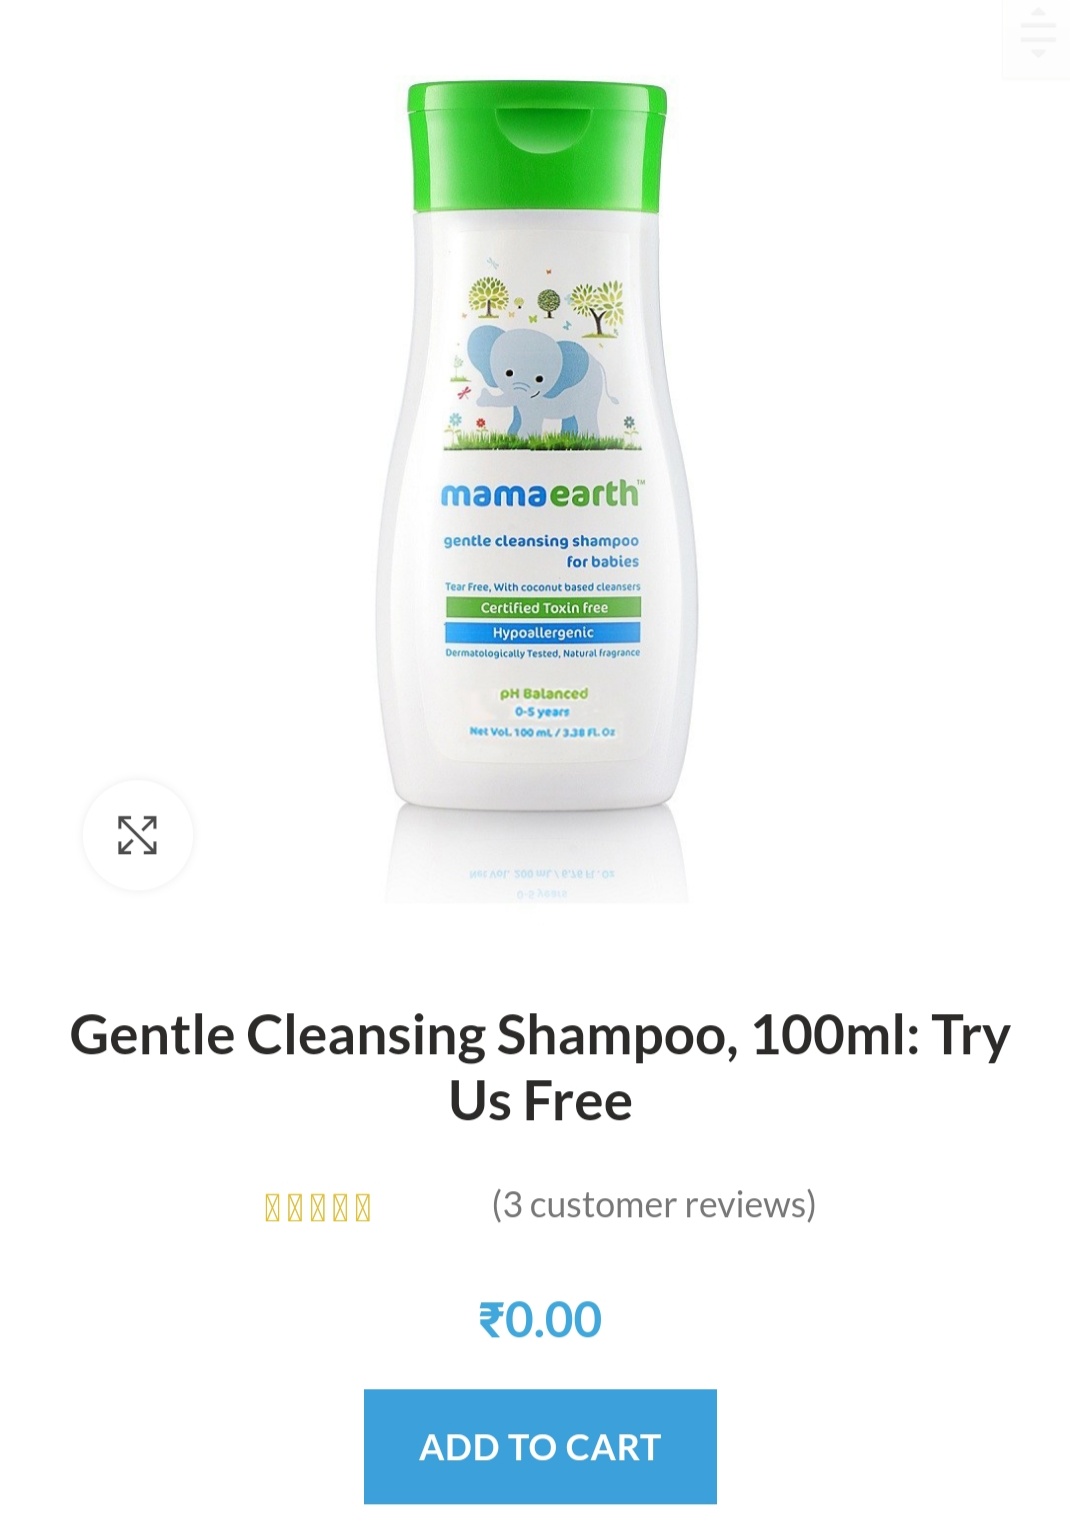 Free-Sample-shampoo-Add-to-cart